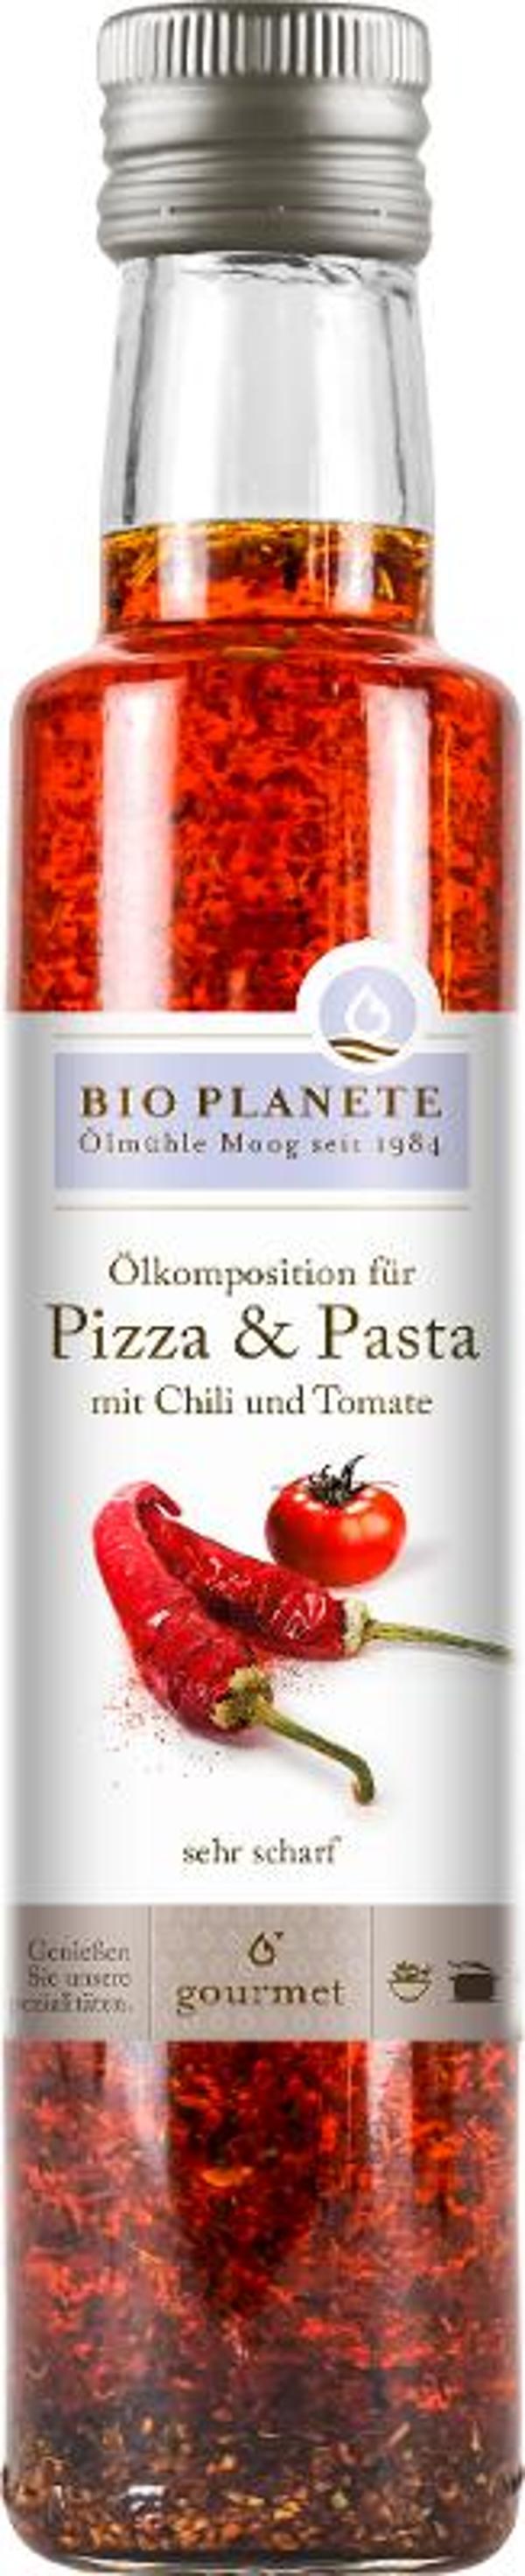 Produktfoto zu Ölkomposition - Pizza & Pasta 250ml